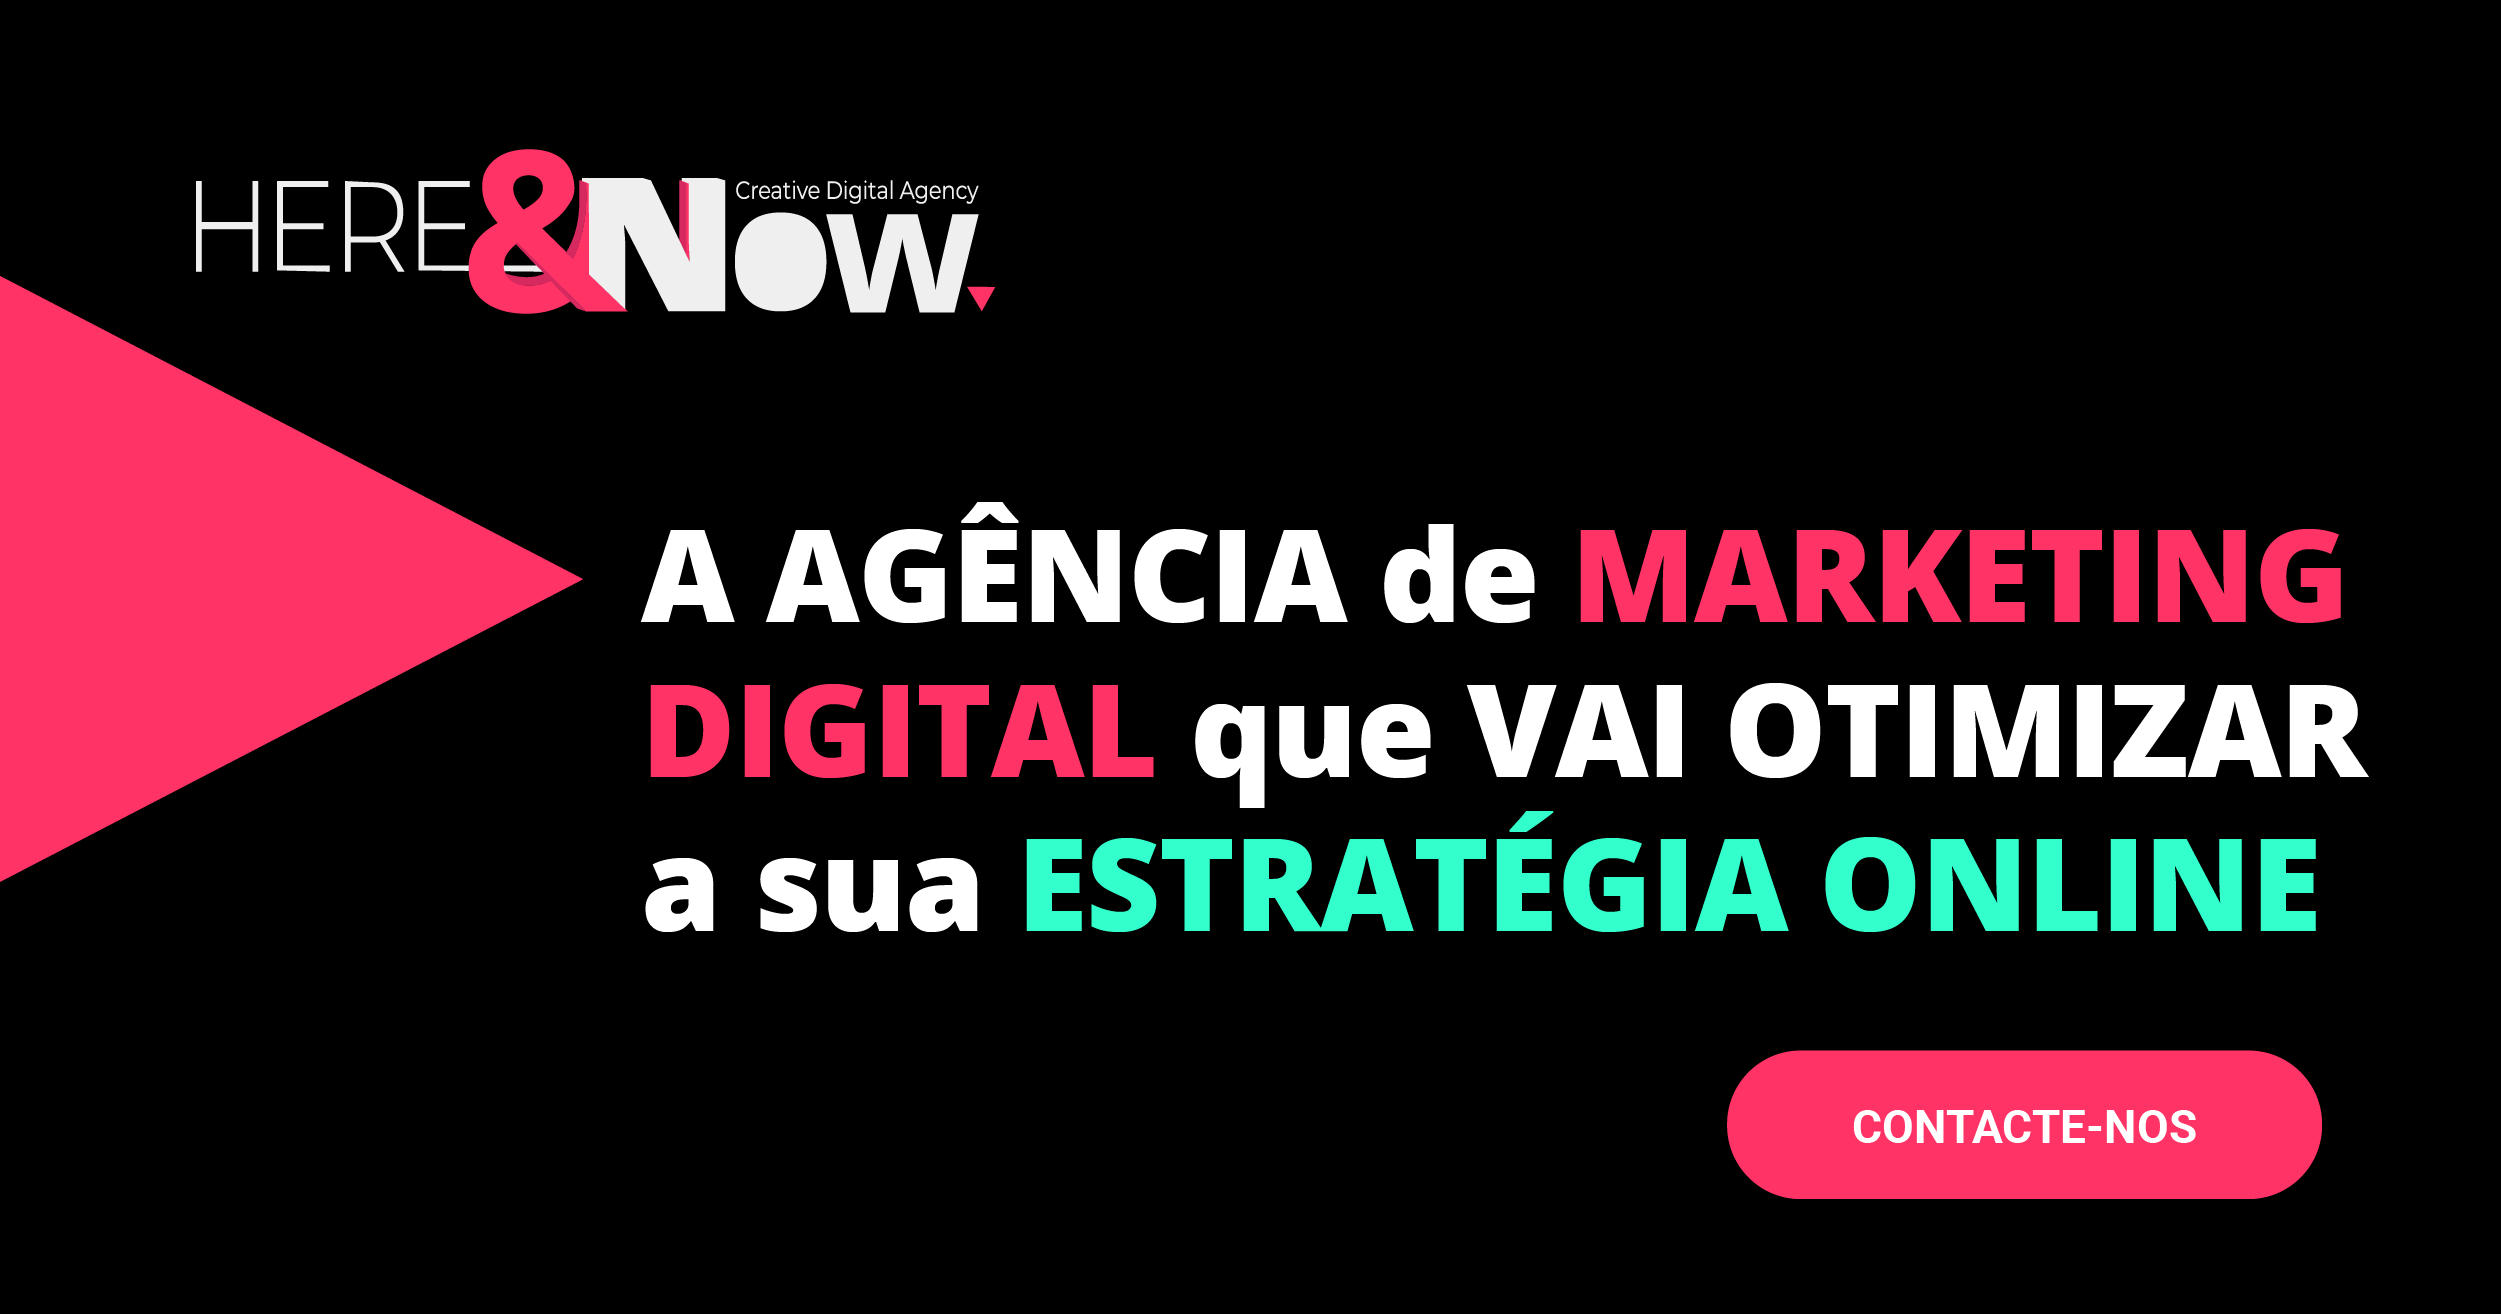 Digital Marketing Agency - Online Marketing | Here & Now